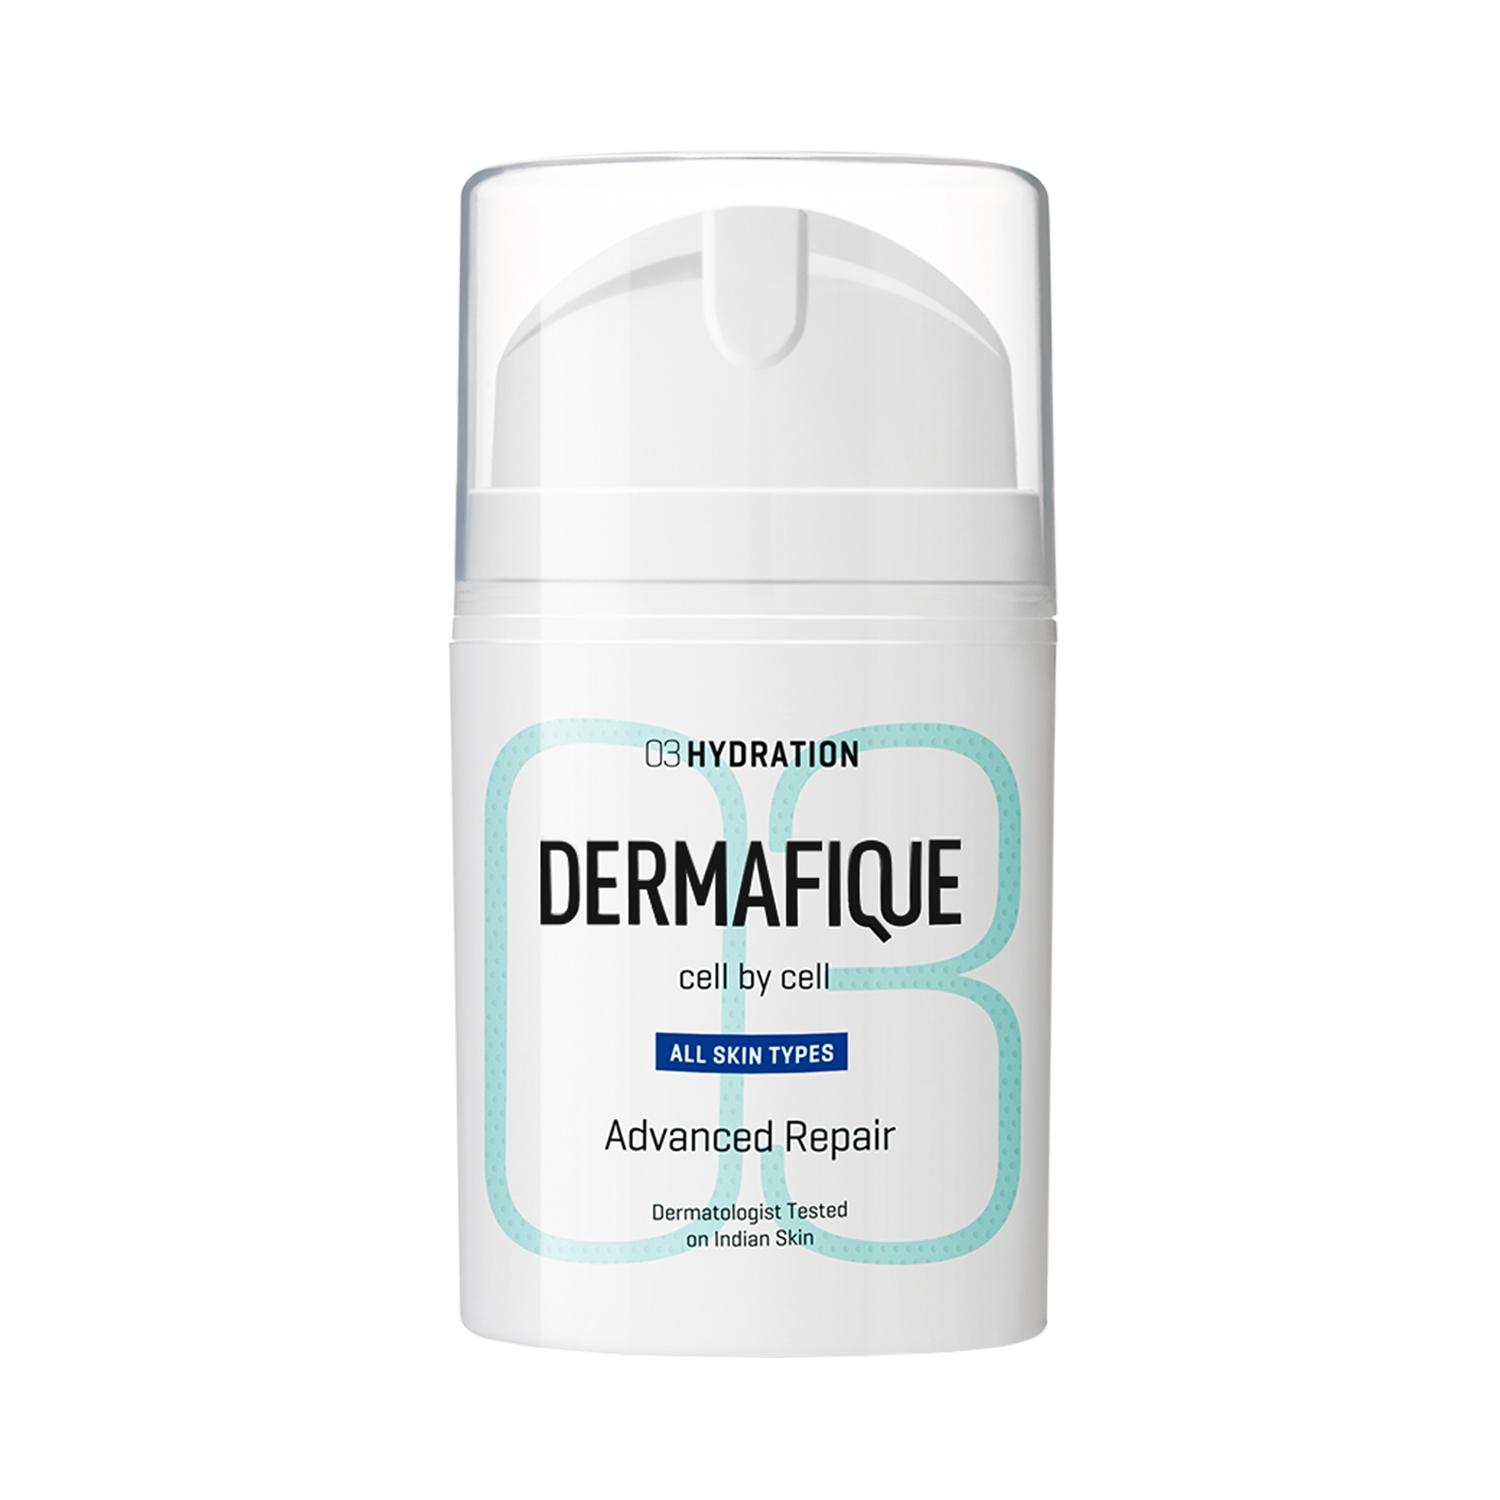 dermafique advanced repair face moisturizer night cream (50g)